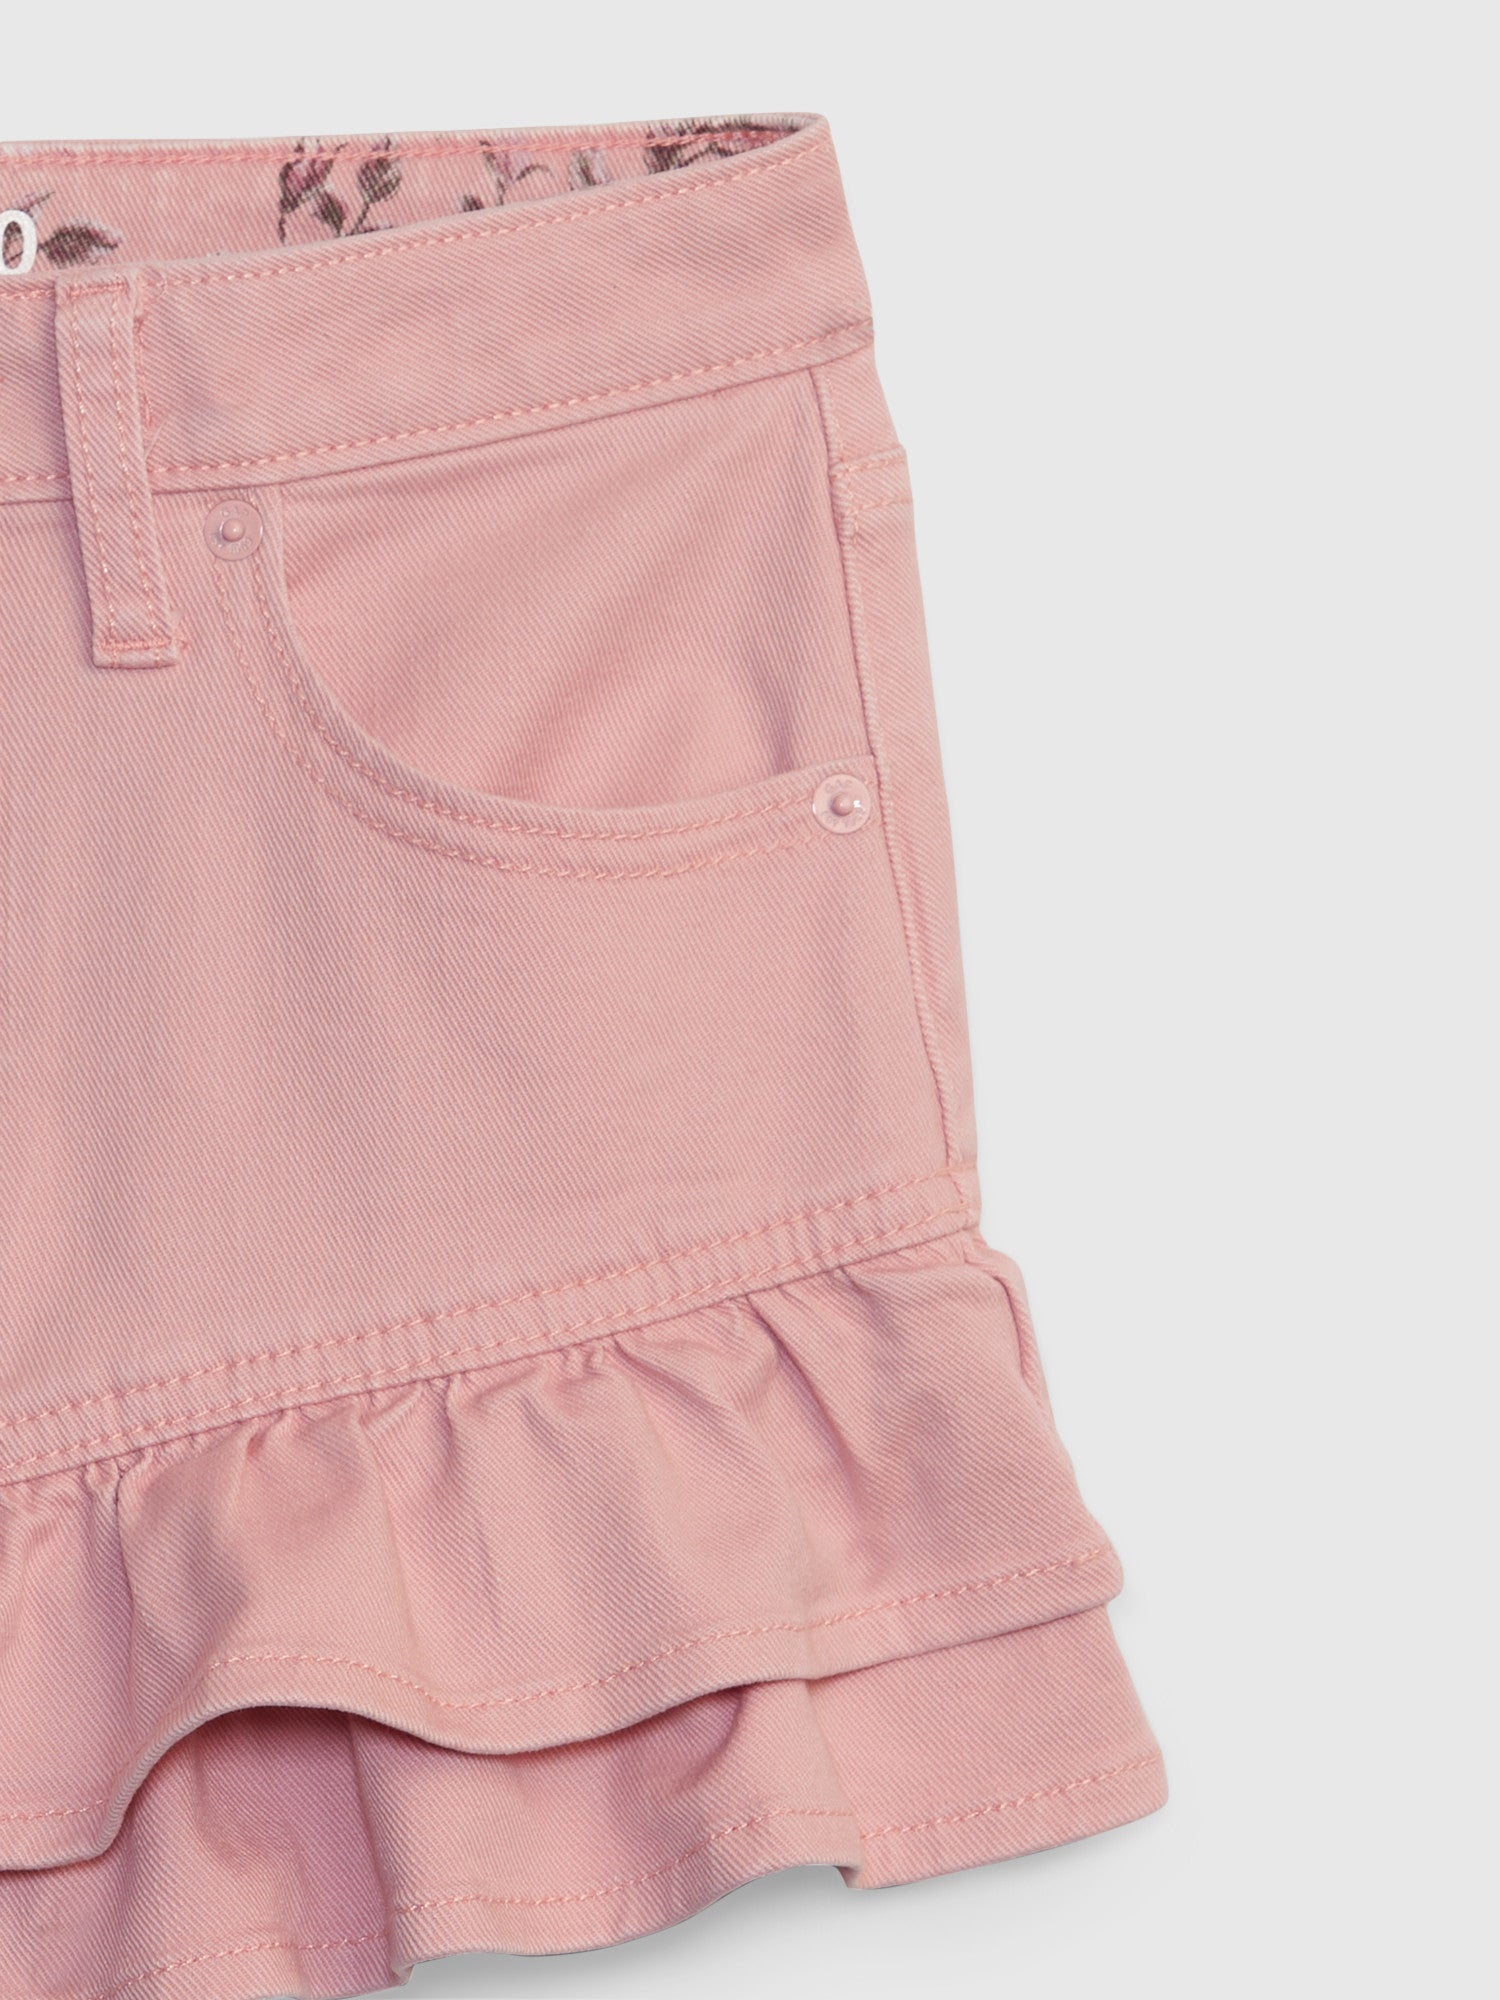 Close up image detailing kids pink denim mini skirt with ruffle hem